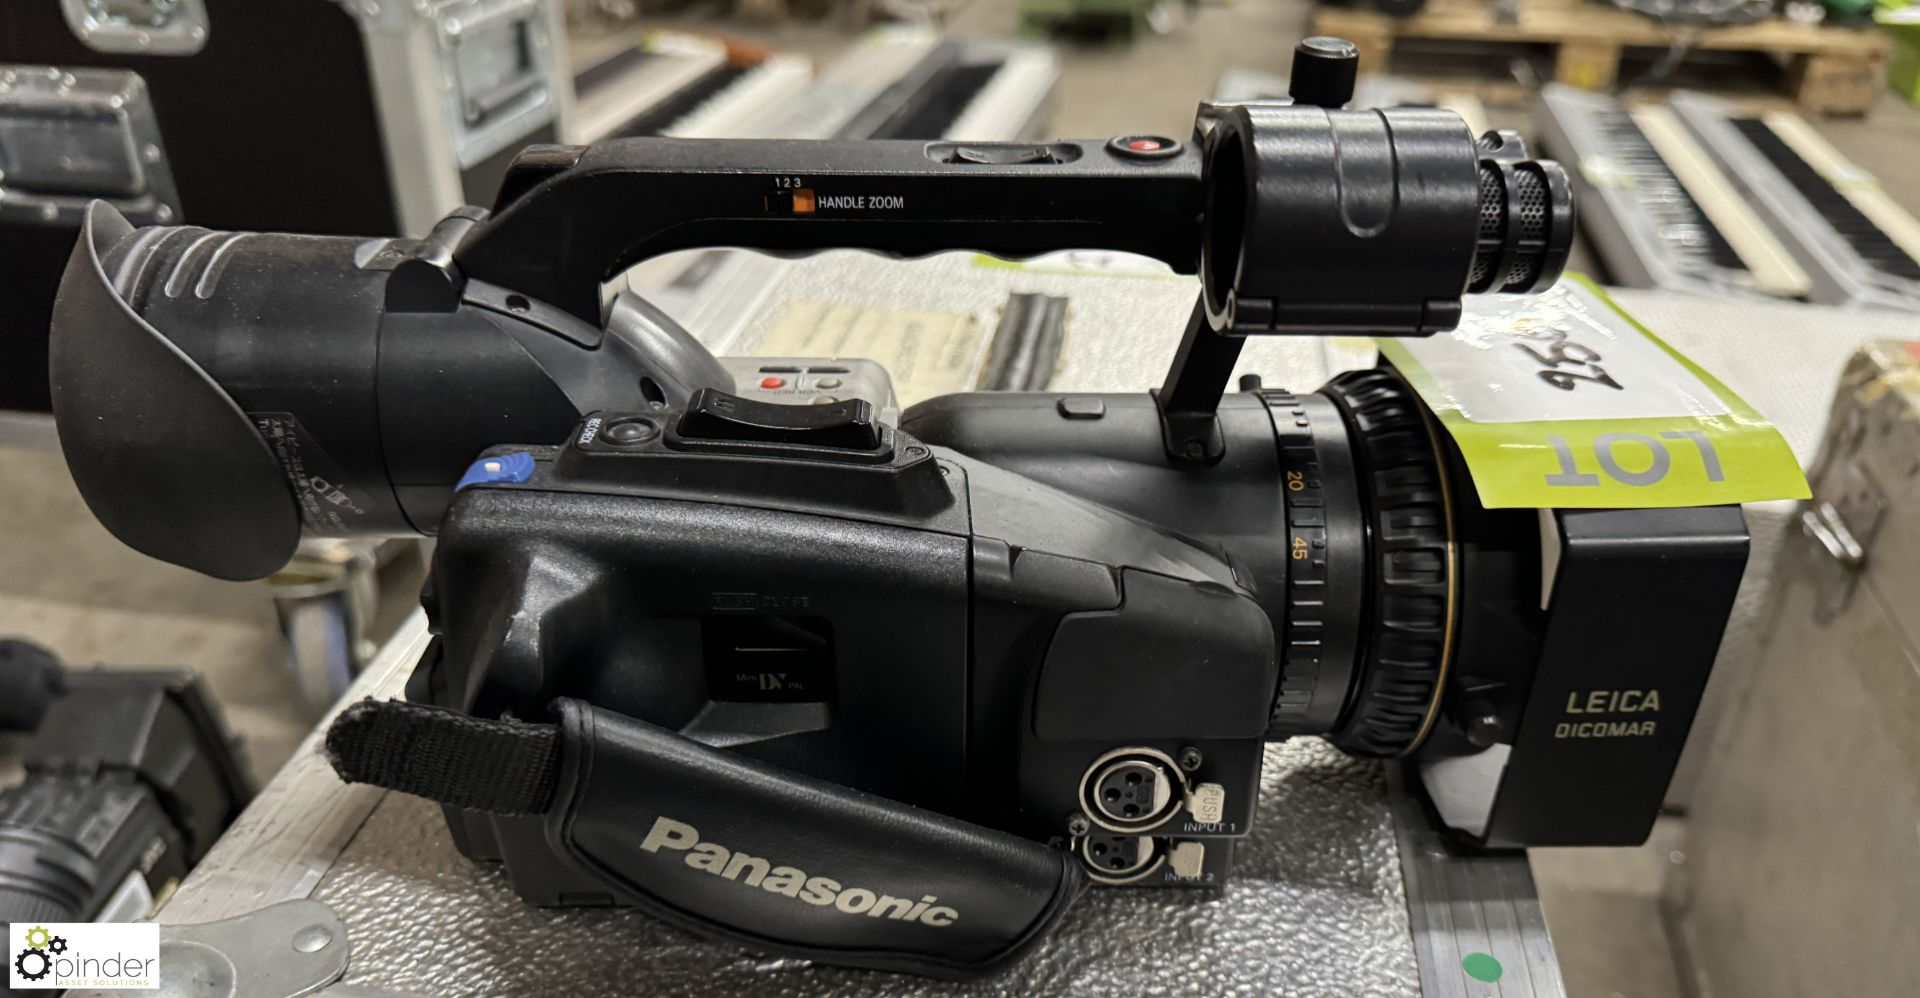 Panasonic AG-DUV100A Camera Recorder, with Leica Dicomar lens - Image 3 of 4